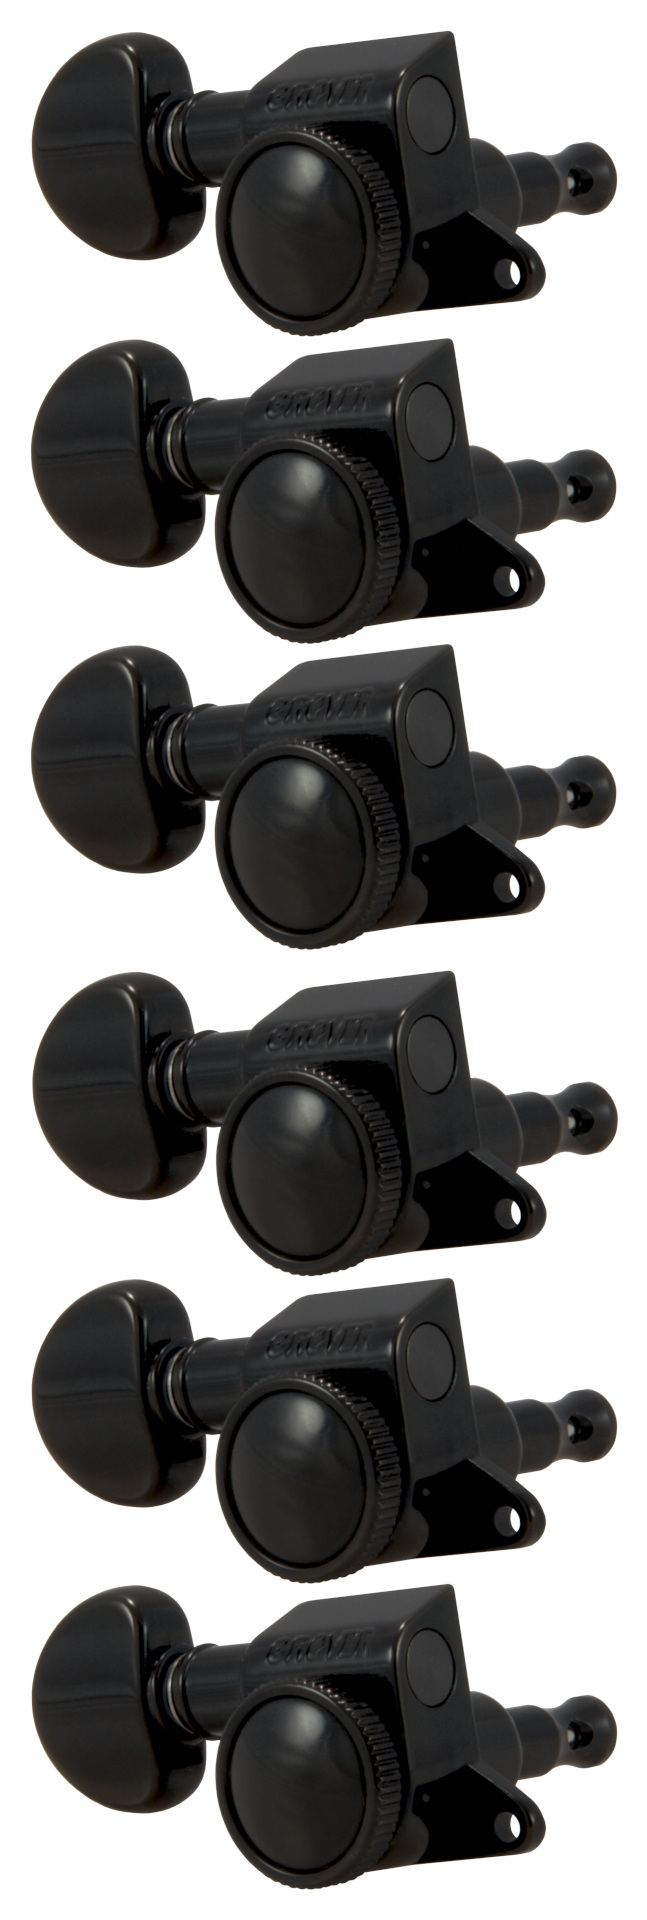 Grover 505BCL6 Mini Roto-Grip Locking Rotomatics - Guitar Machine Heads, 6-in-Line, Lefthand, Treble Side (Right) - Black Chrome